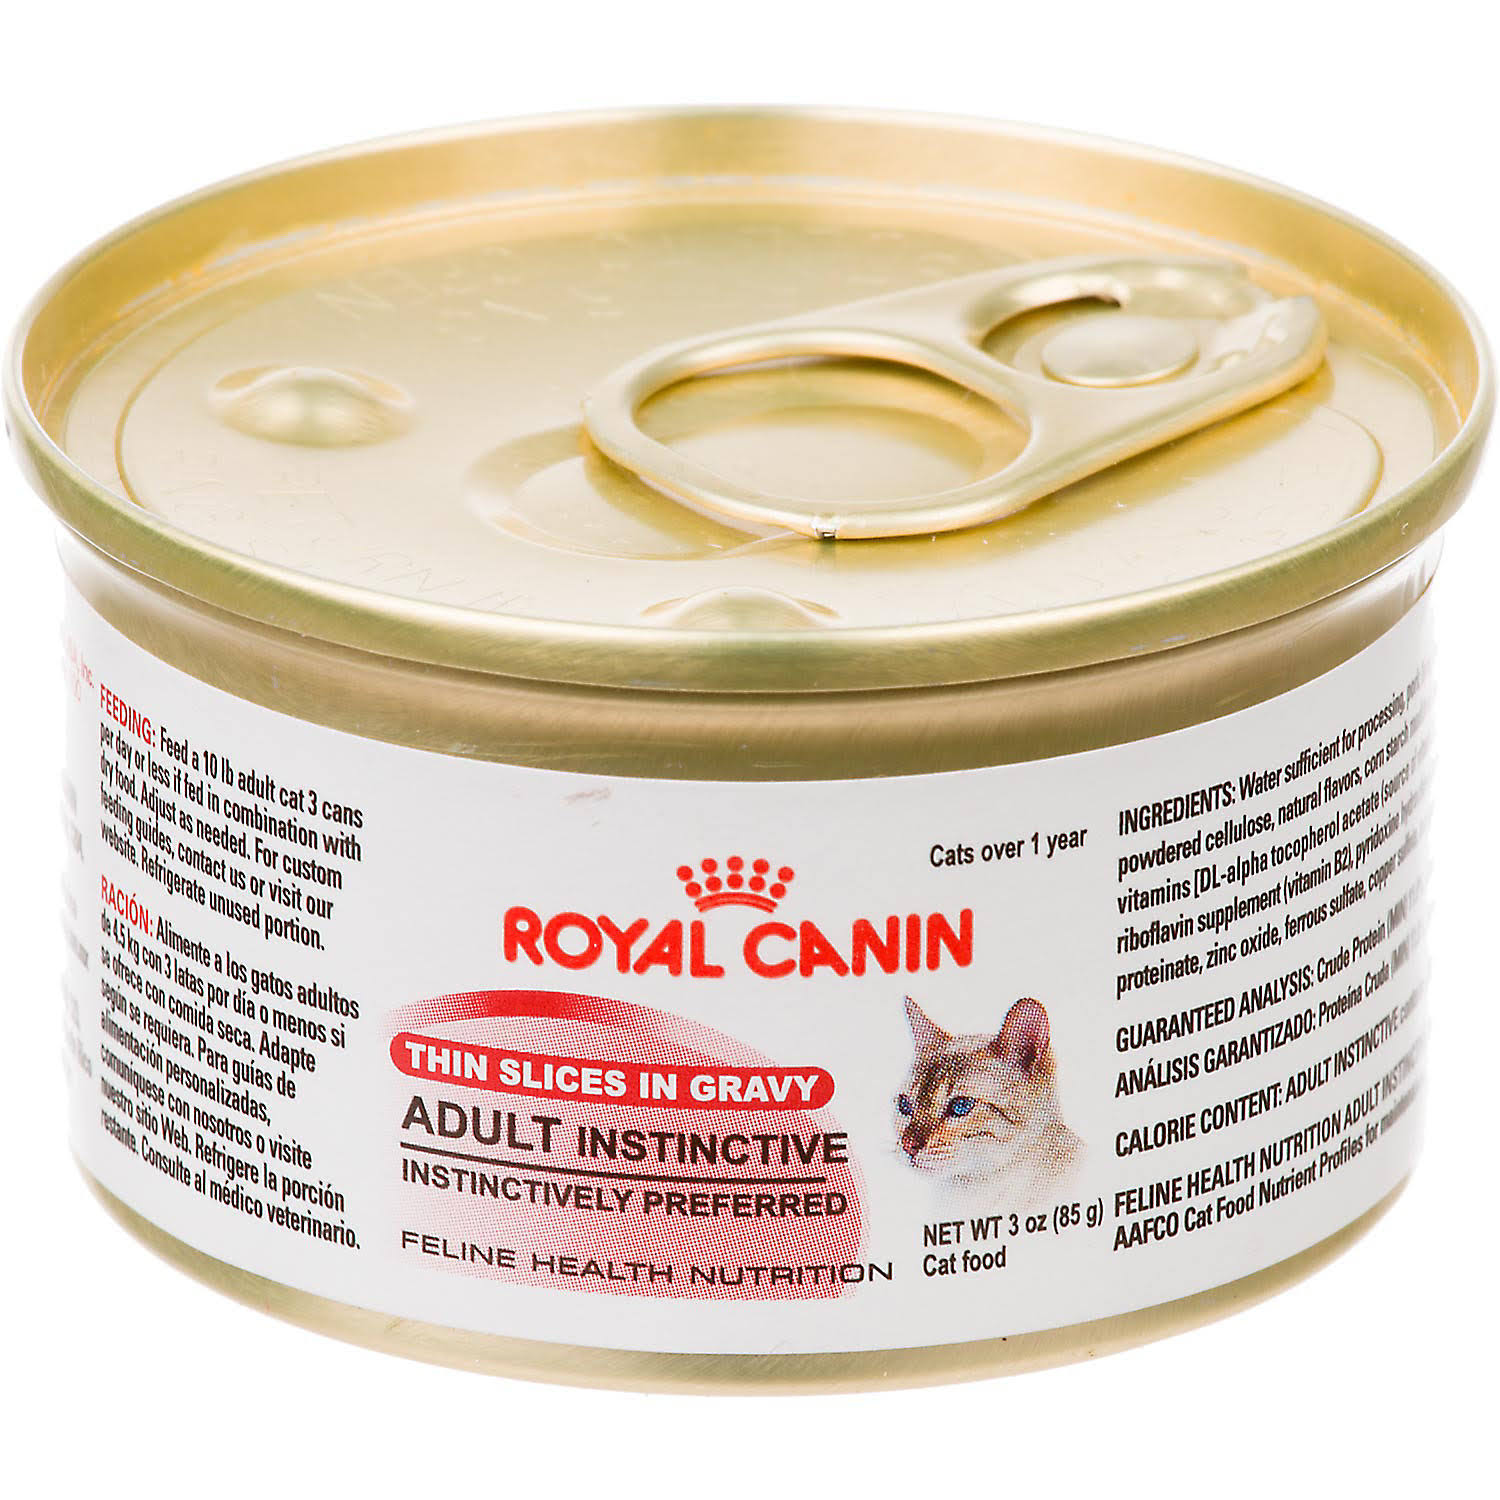 Royal Canin Feline Health Nutrition Adult Instinctive Canned Cat Food - 3oz